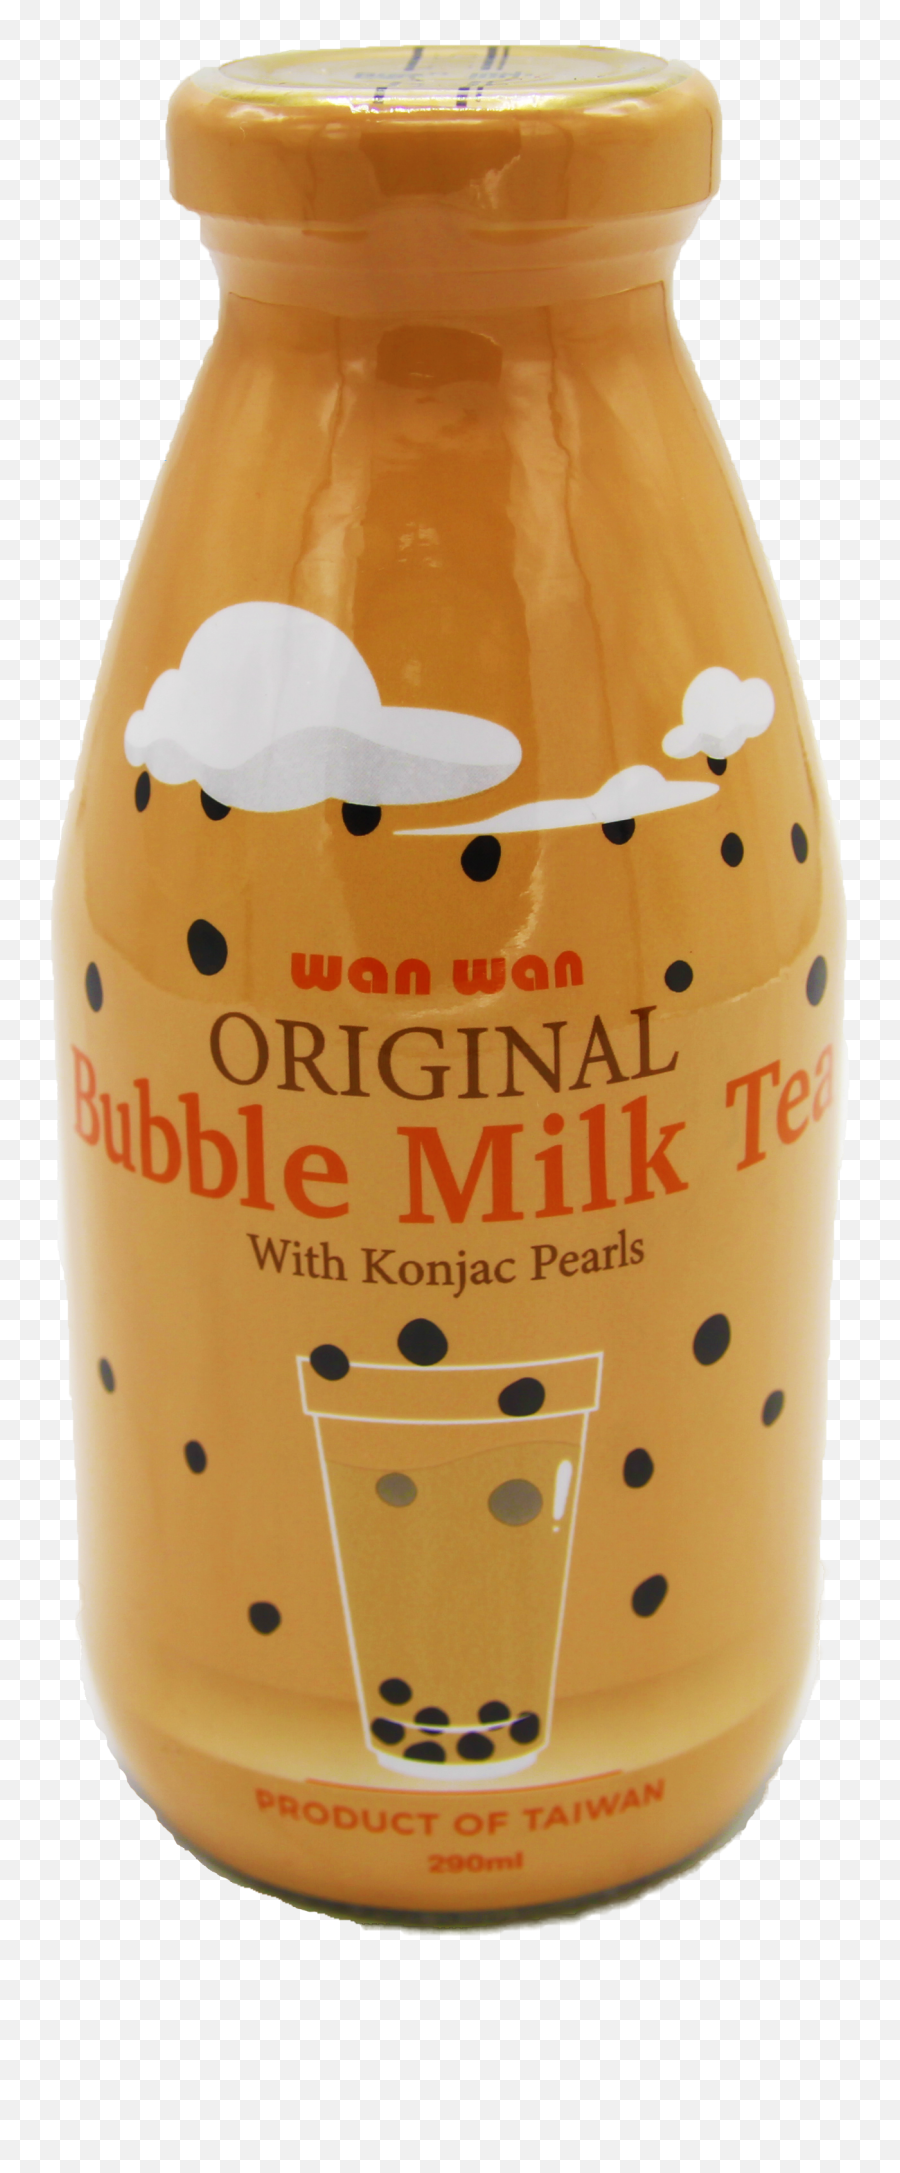 03 - 11wanwan Bubble Milk Teaoriginaltaiwan Beverage Oemu0026 Plastic Bottle Png,Bubble Tea Transparent